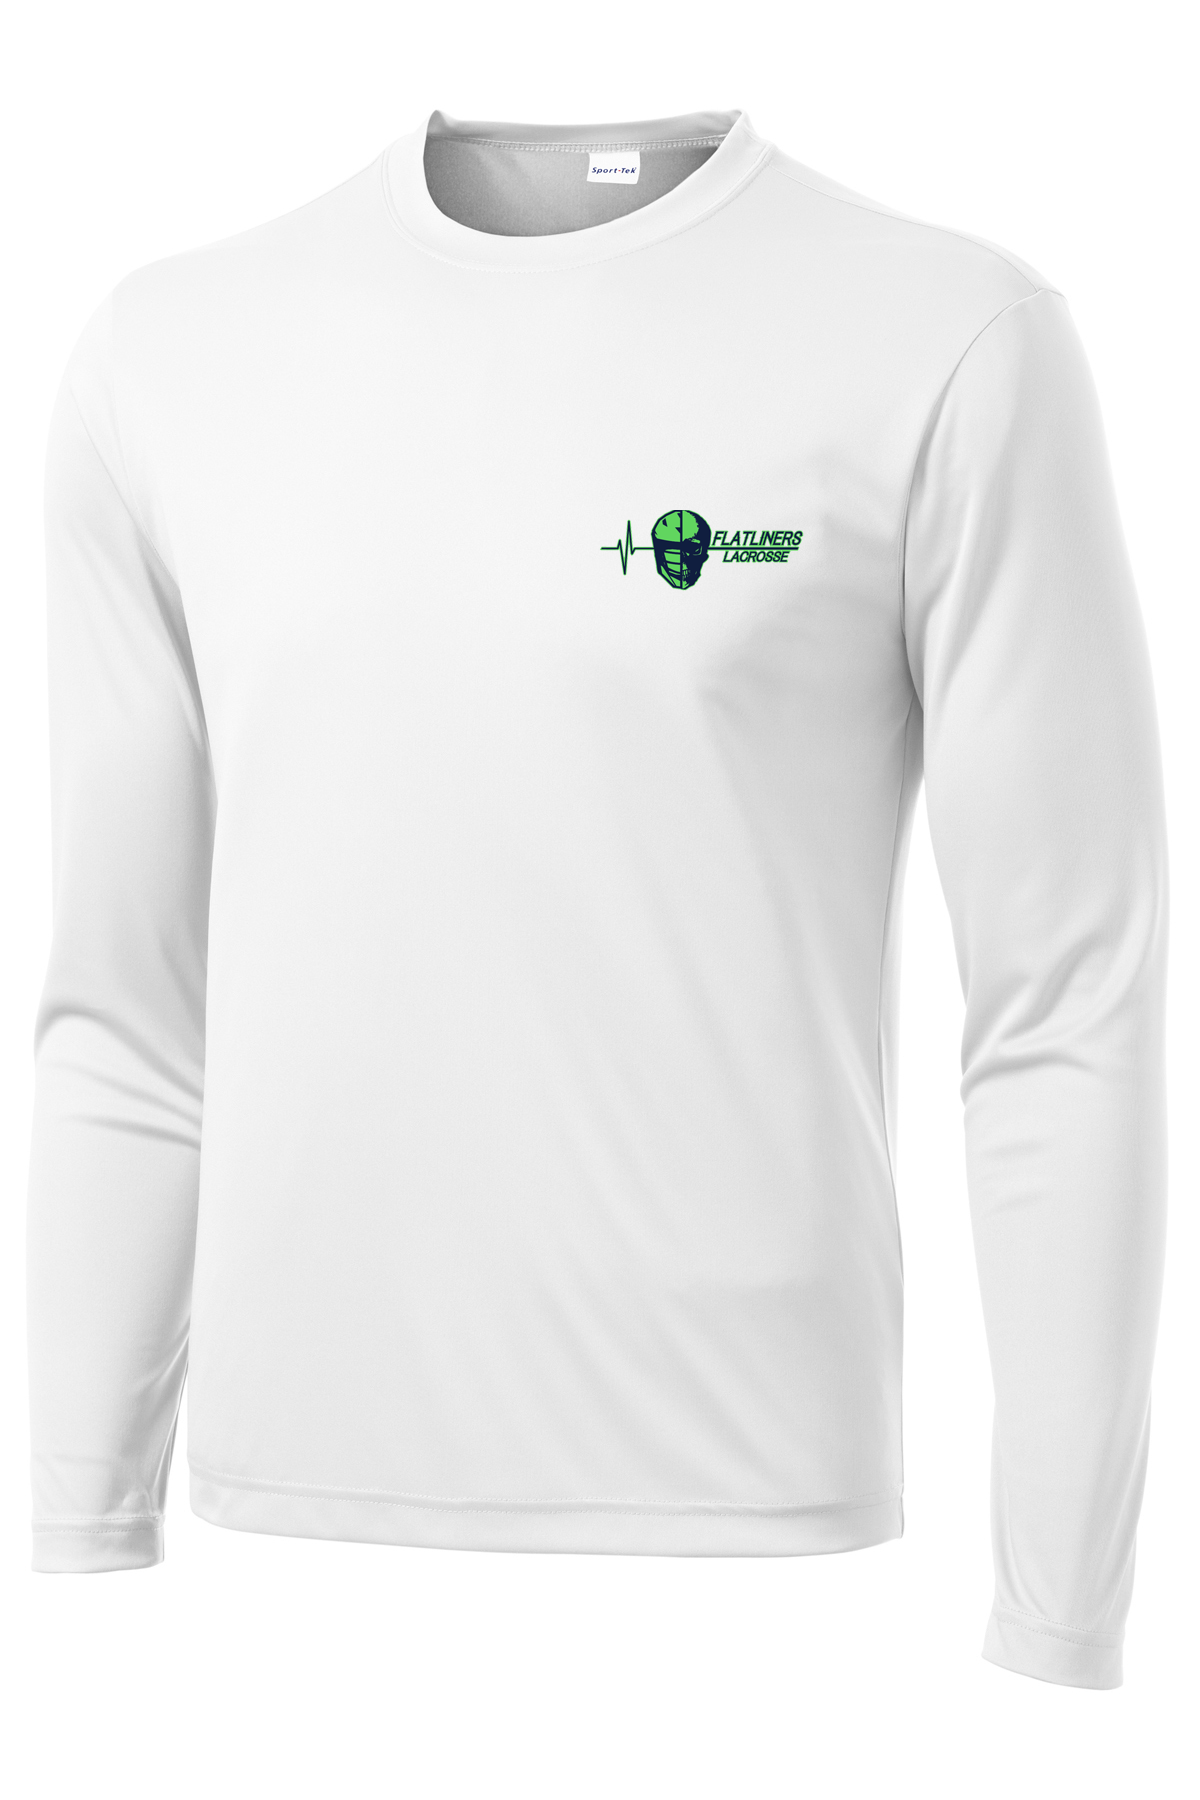 Flatliners Lacrosse White Long Sleeve Performance Shirt